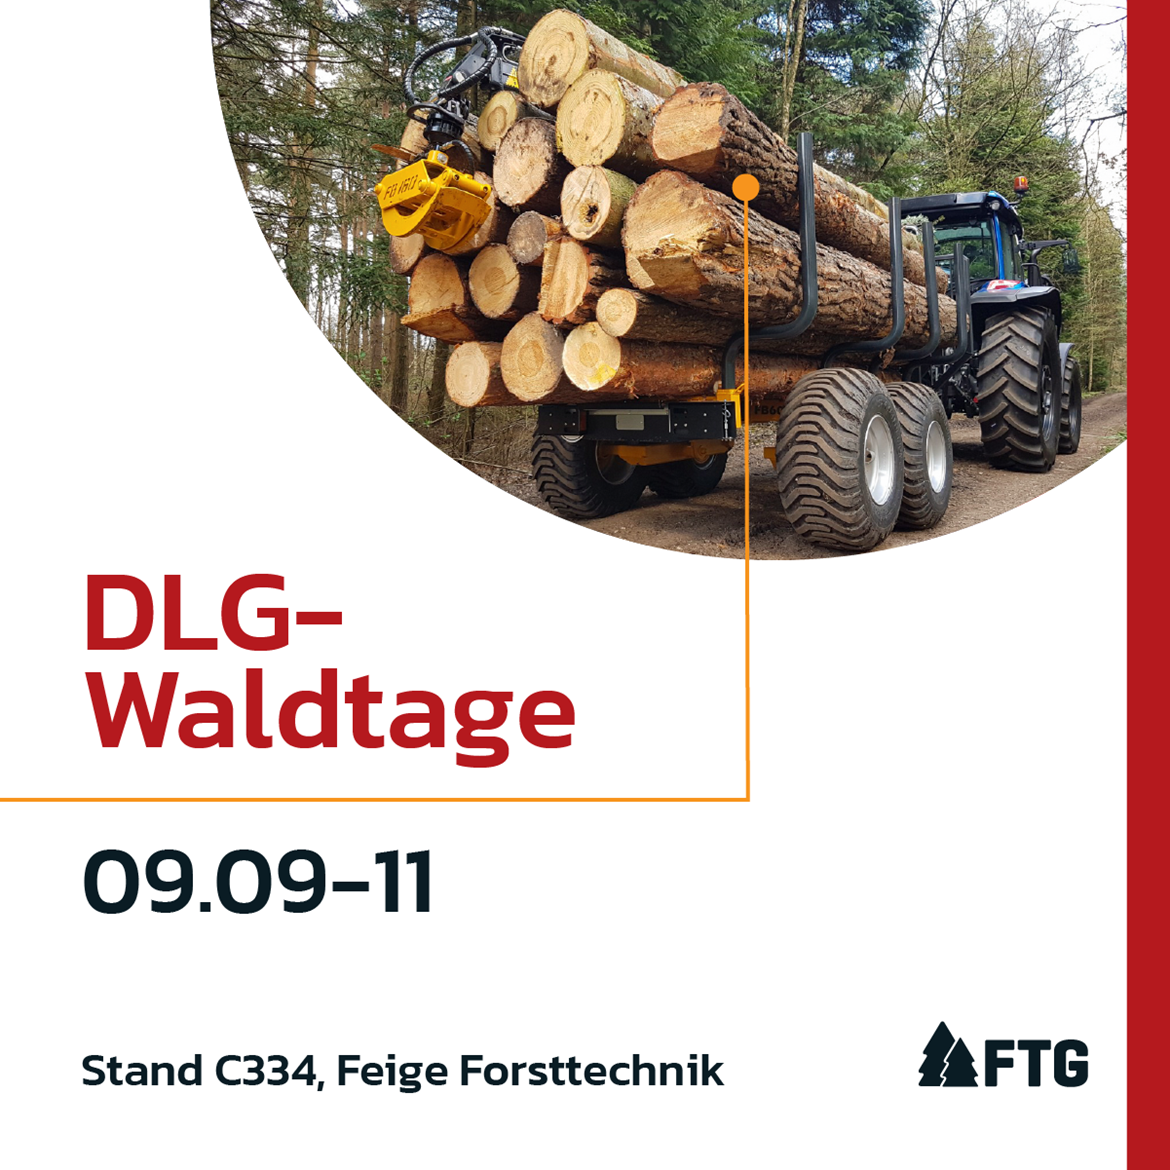 DLG Waldtage Ausstellung FTG Källefall Feige Forsttechnik 2022.png